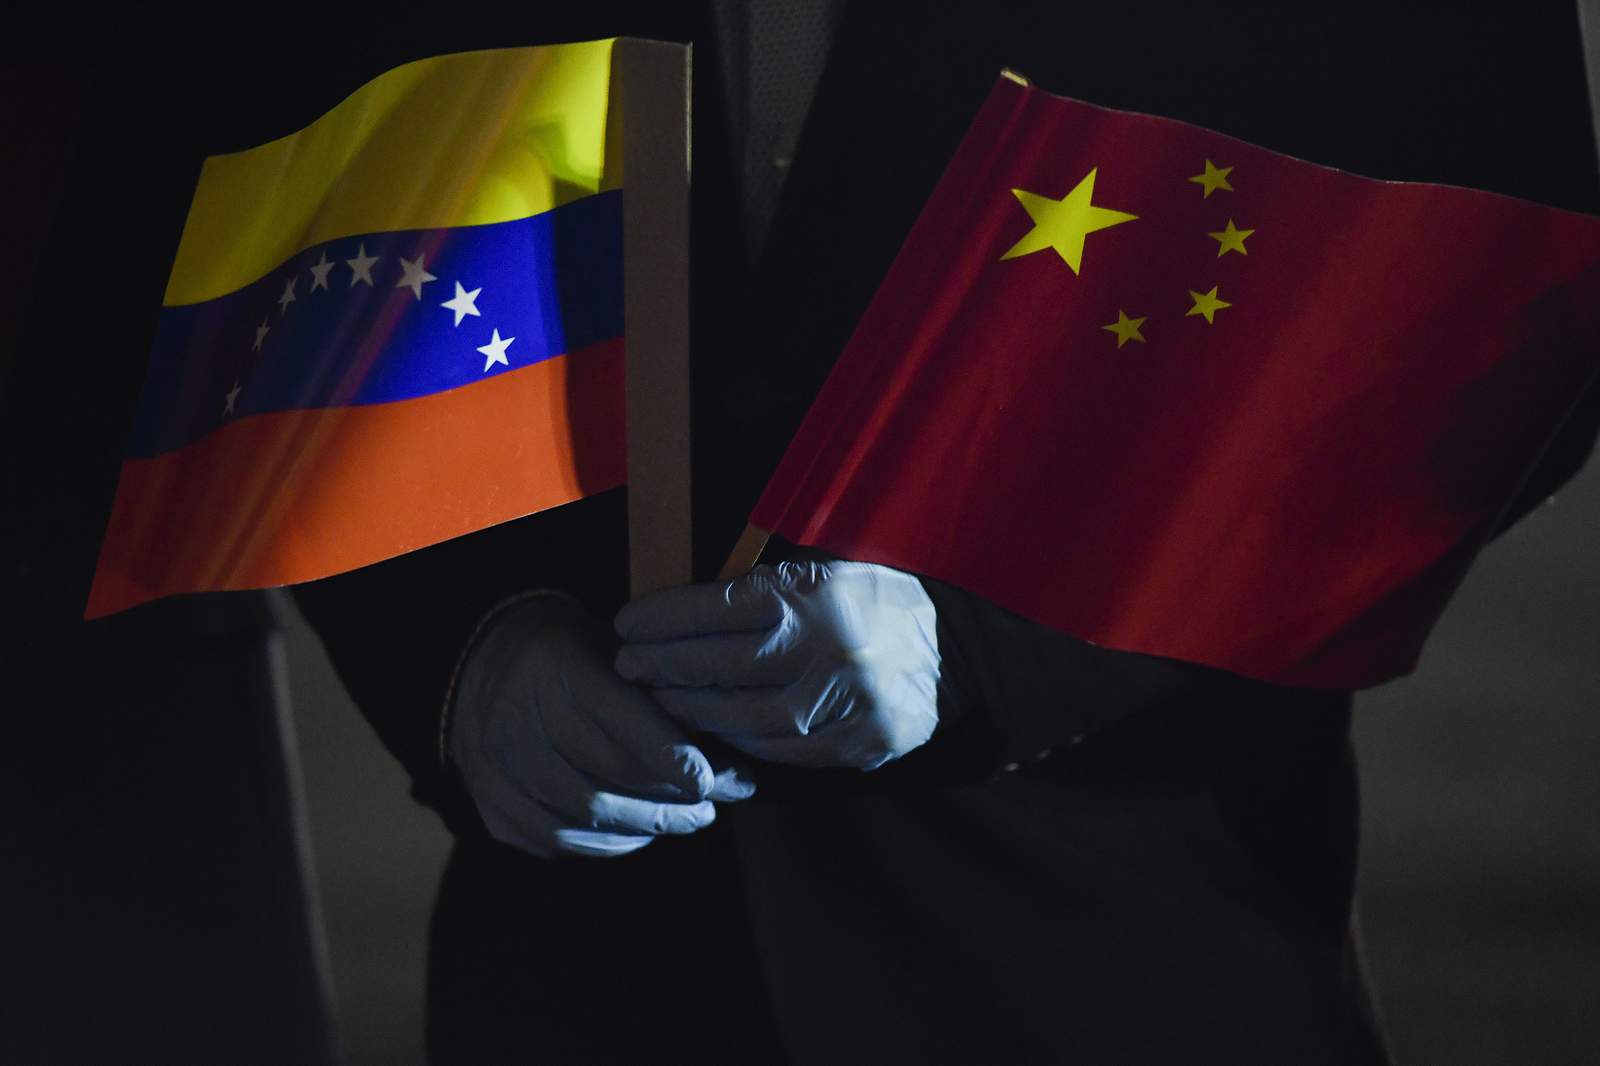 Chinese loans to Latin America plunge as virus strains ties